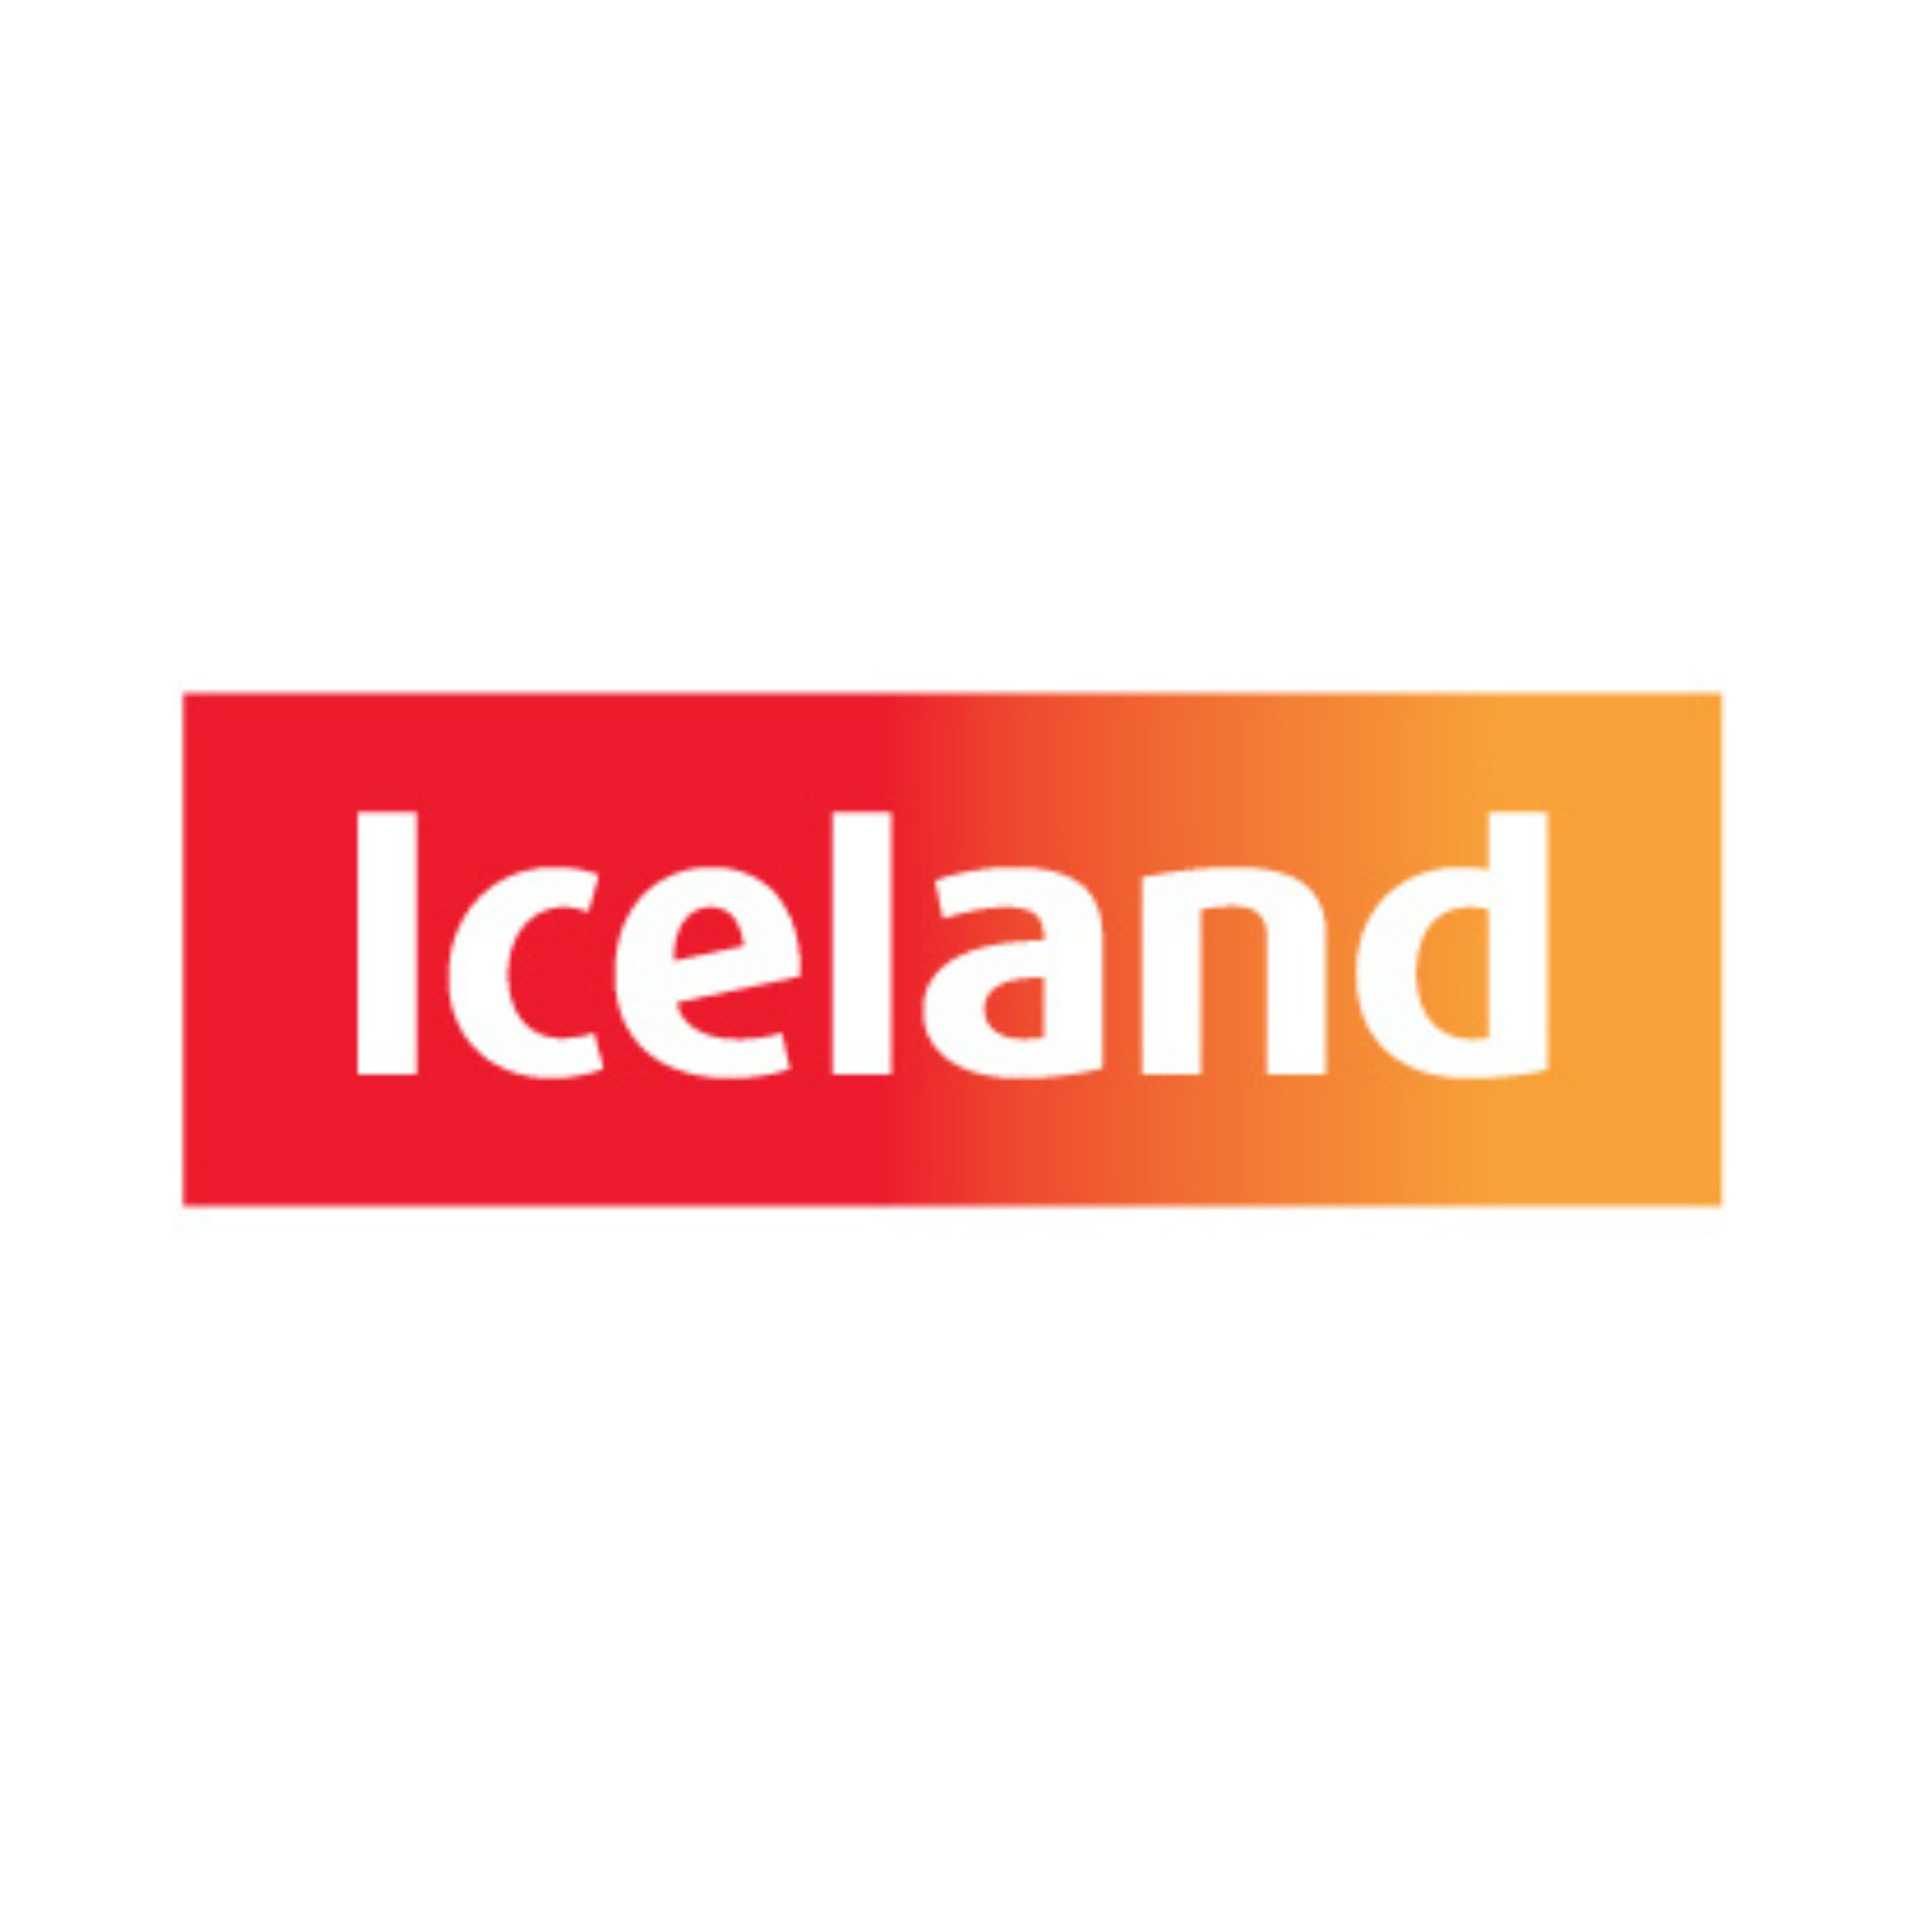 Iceland Overseas